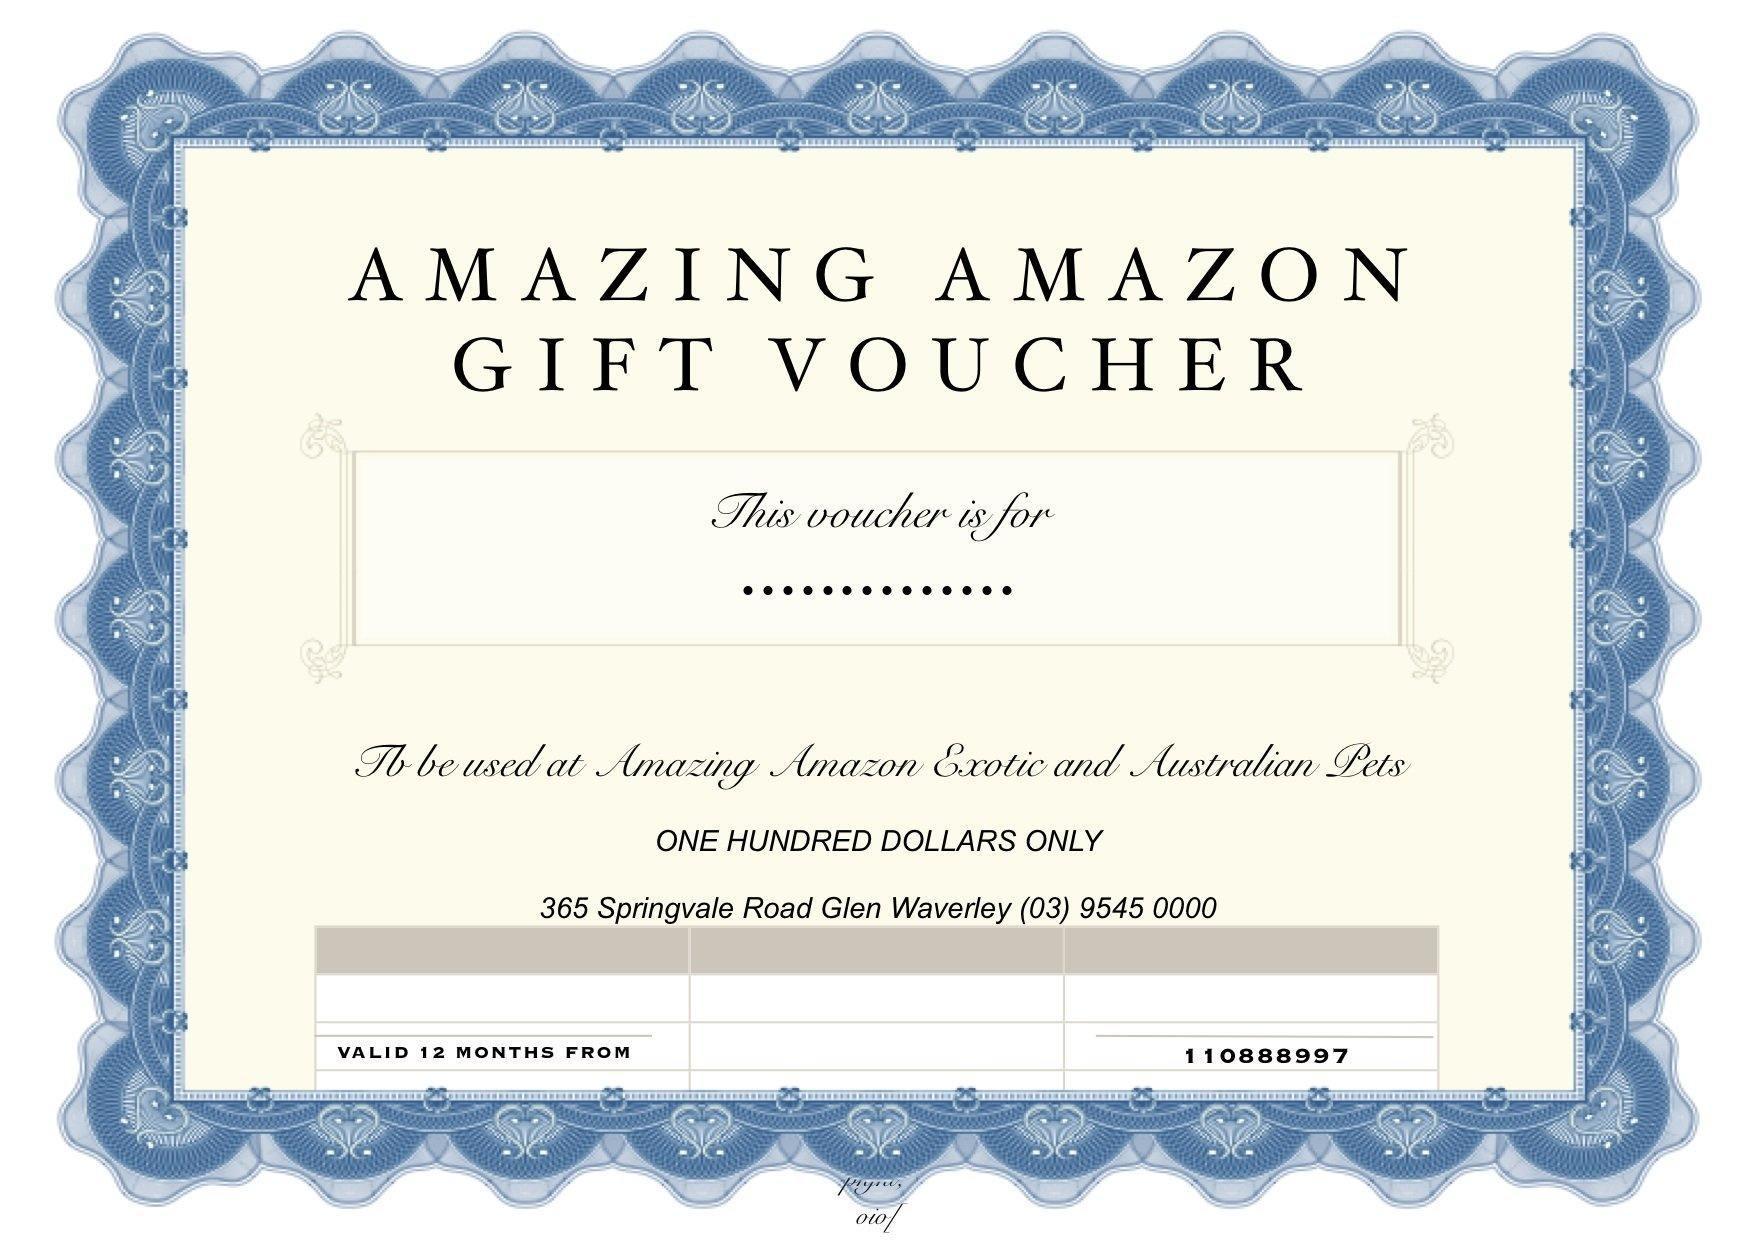 Gift Voucher $100 FREE DELIVERY - Amazing Amazon